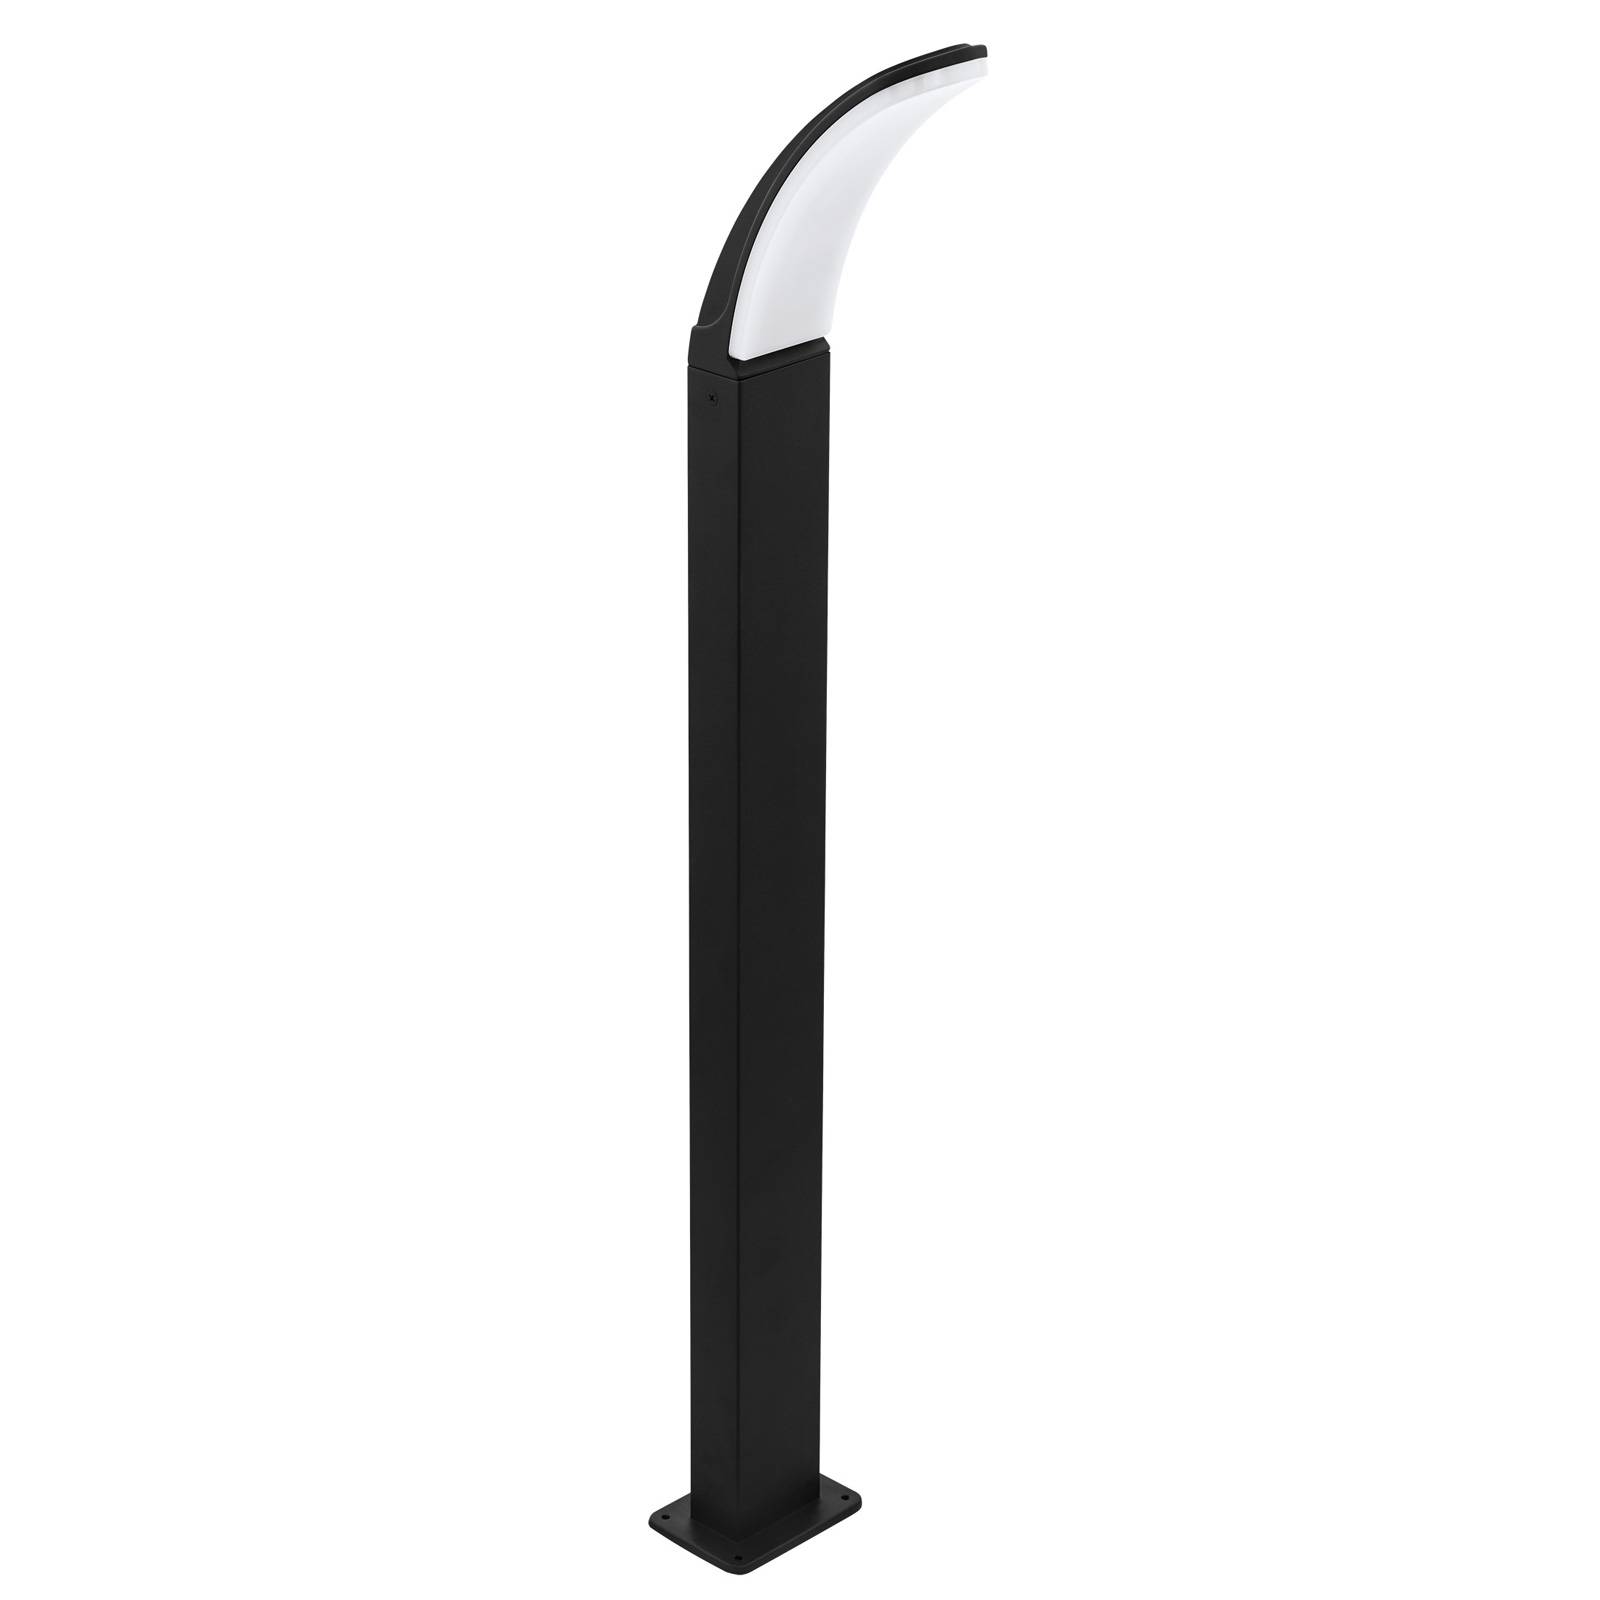 Fiumicino LED ösvény lámpa, ívelt alakú